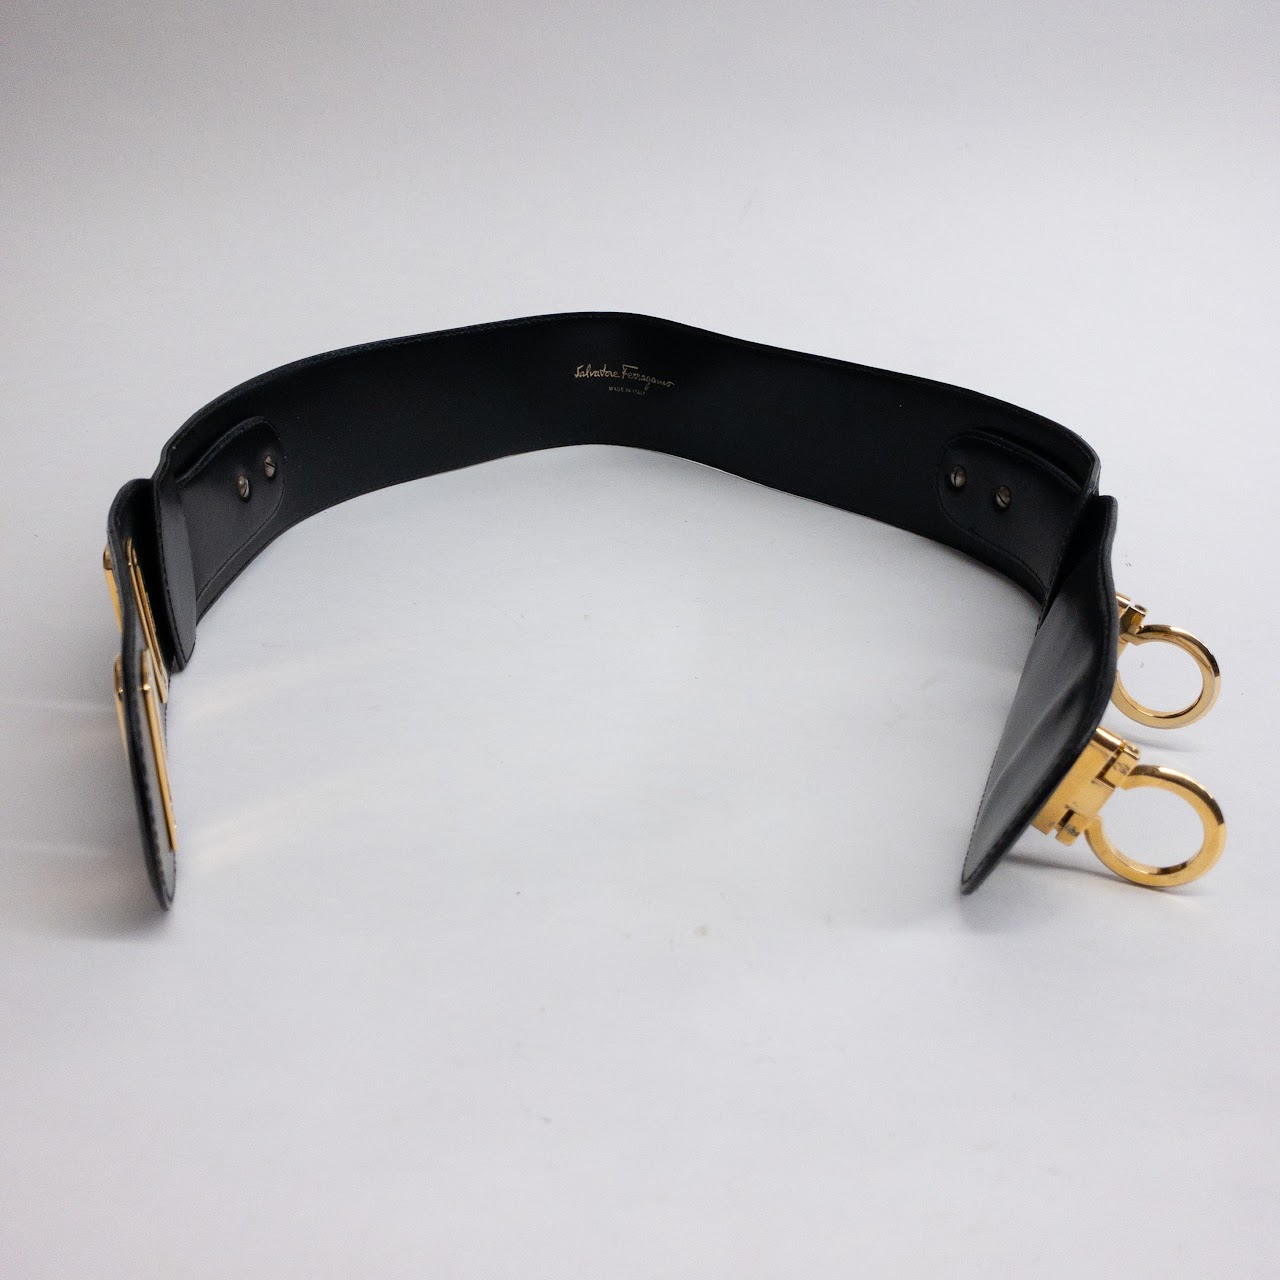 Salvatore Ferragamo Black Leather Belt